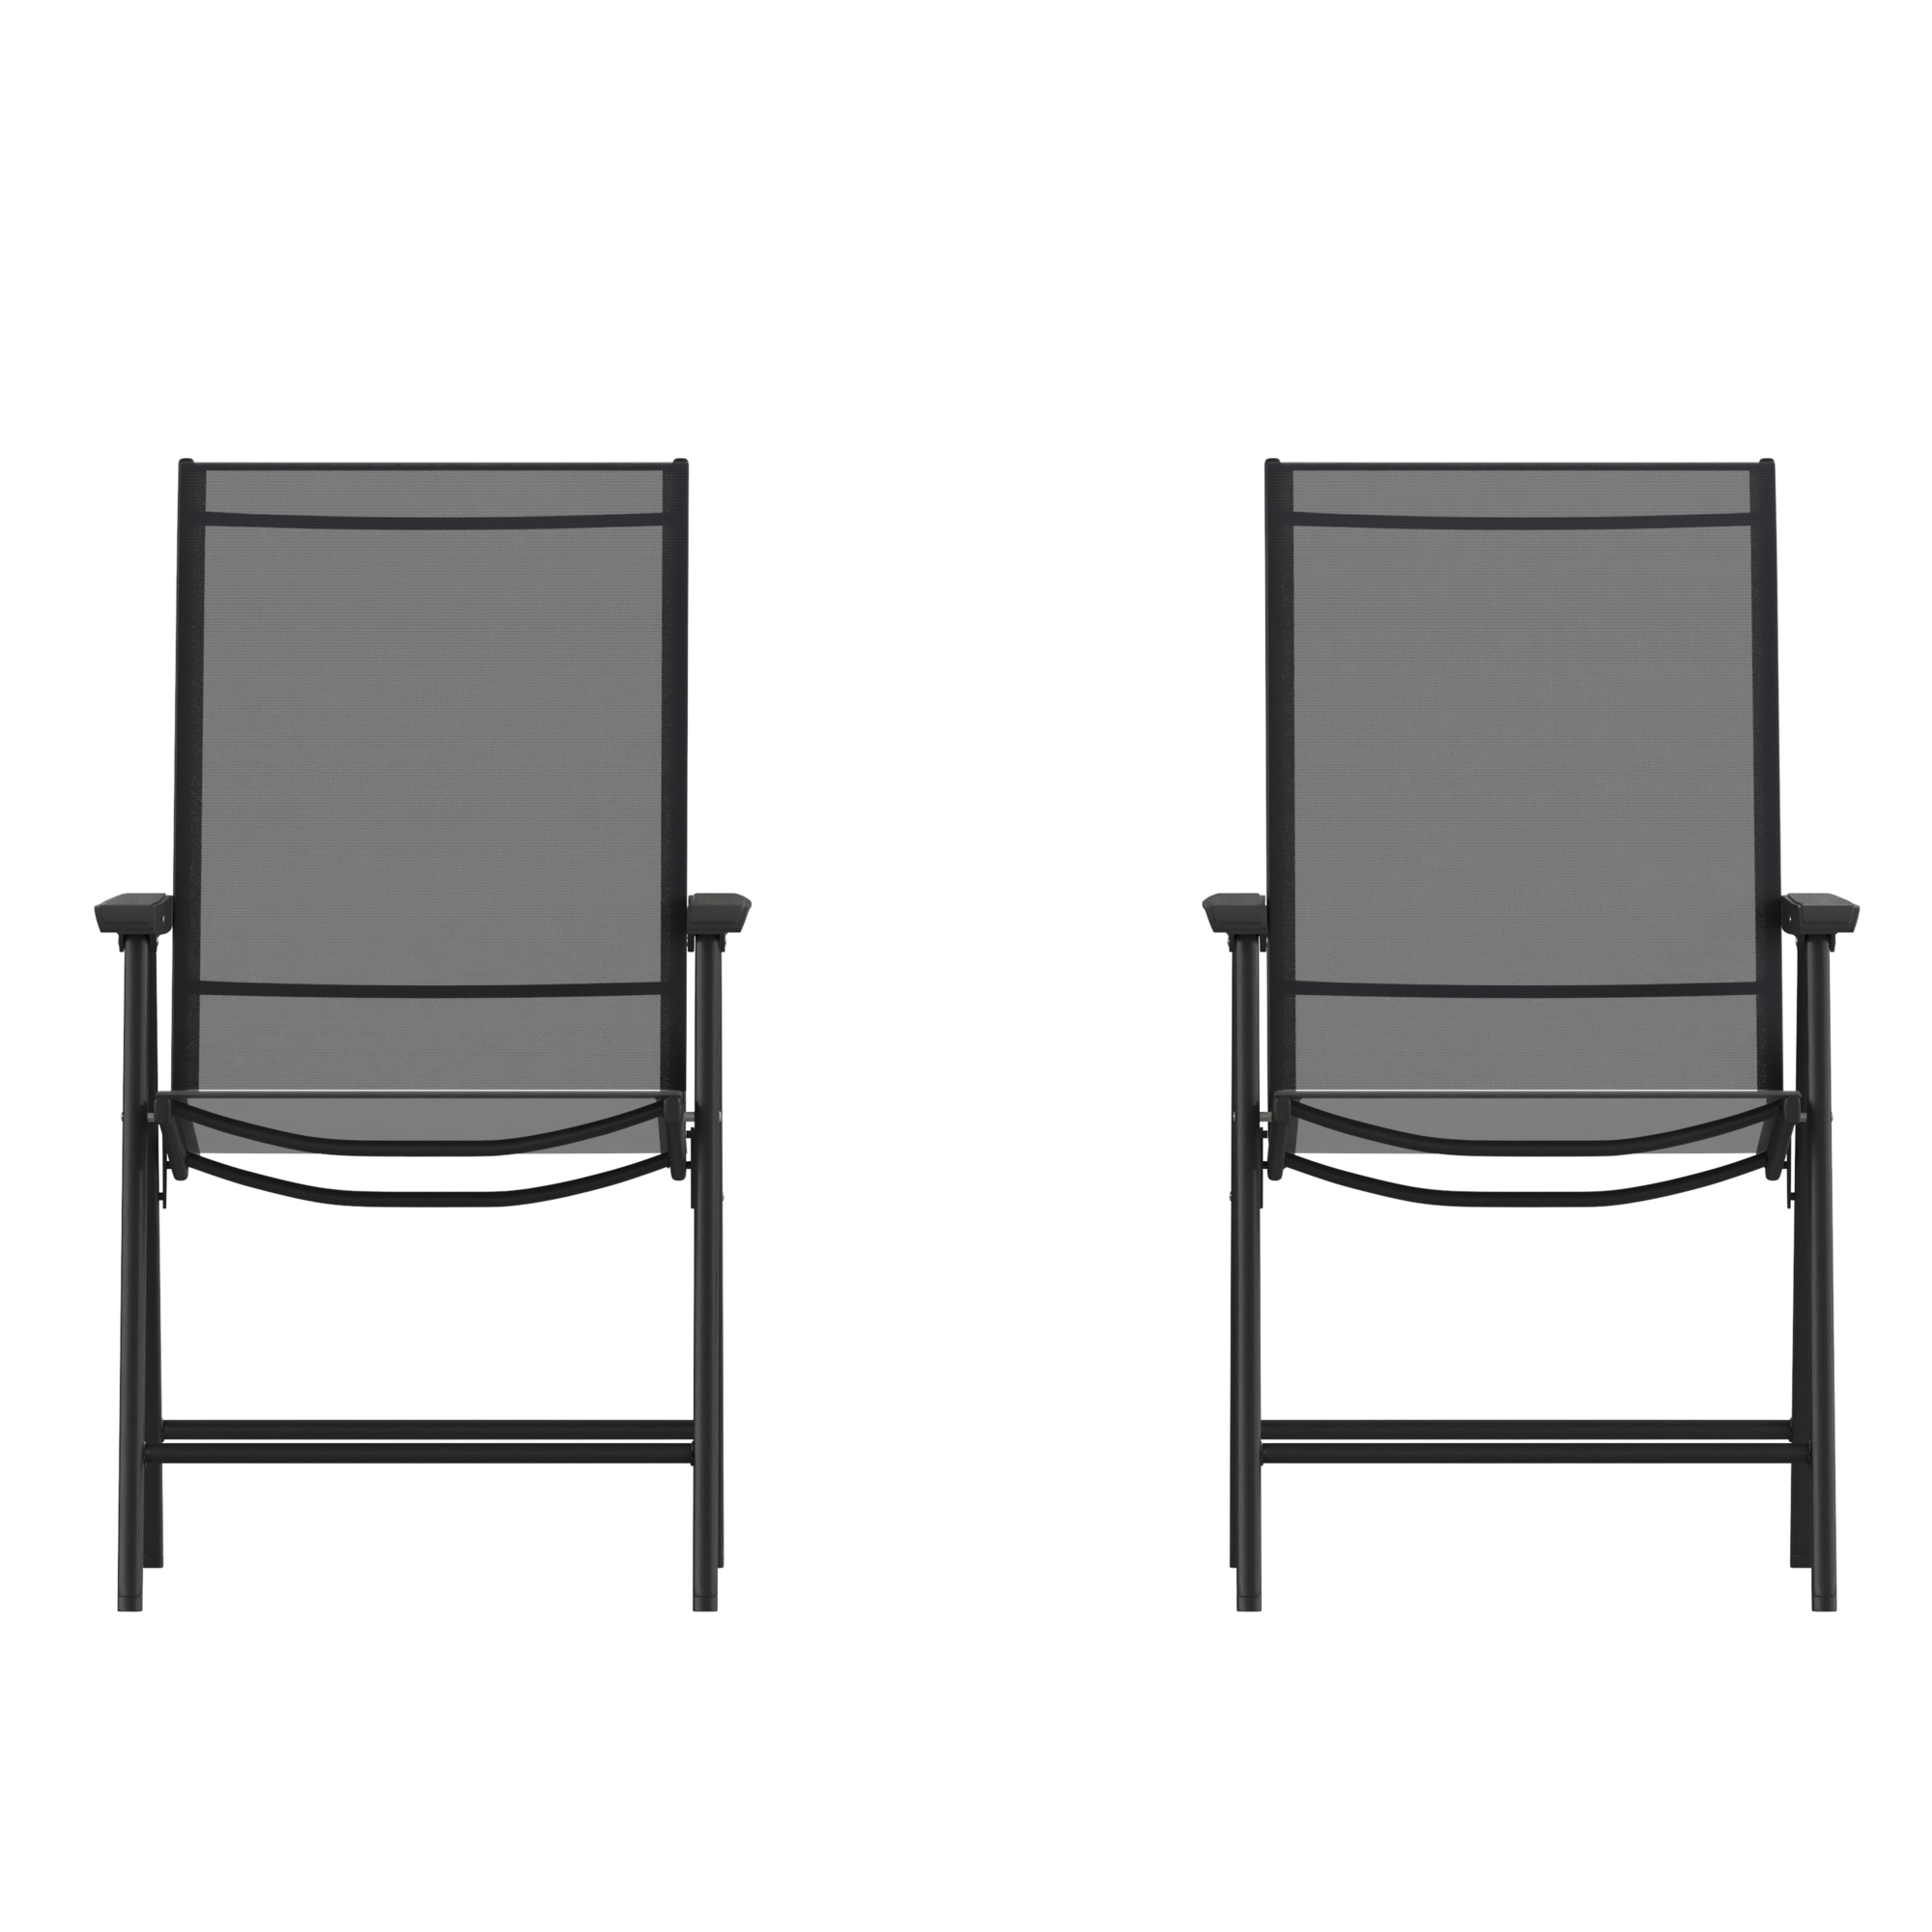 Flash Furniture, 2PK Black/Black Outdoor Folding Patio Sling Chair, Primary Color Black, Material Steel, Width 20.75 in, Model 2TLHSC044BKBK